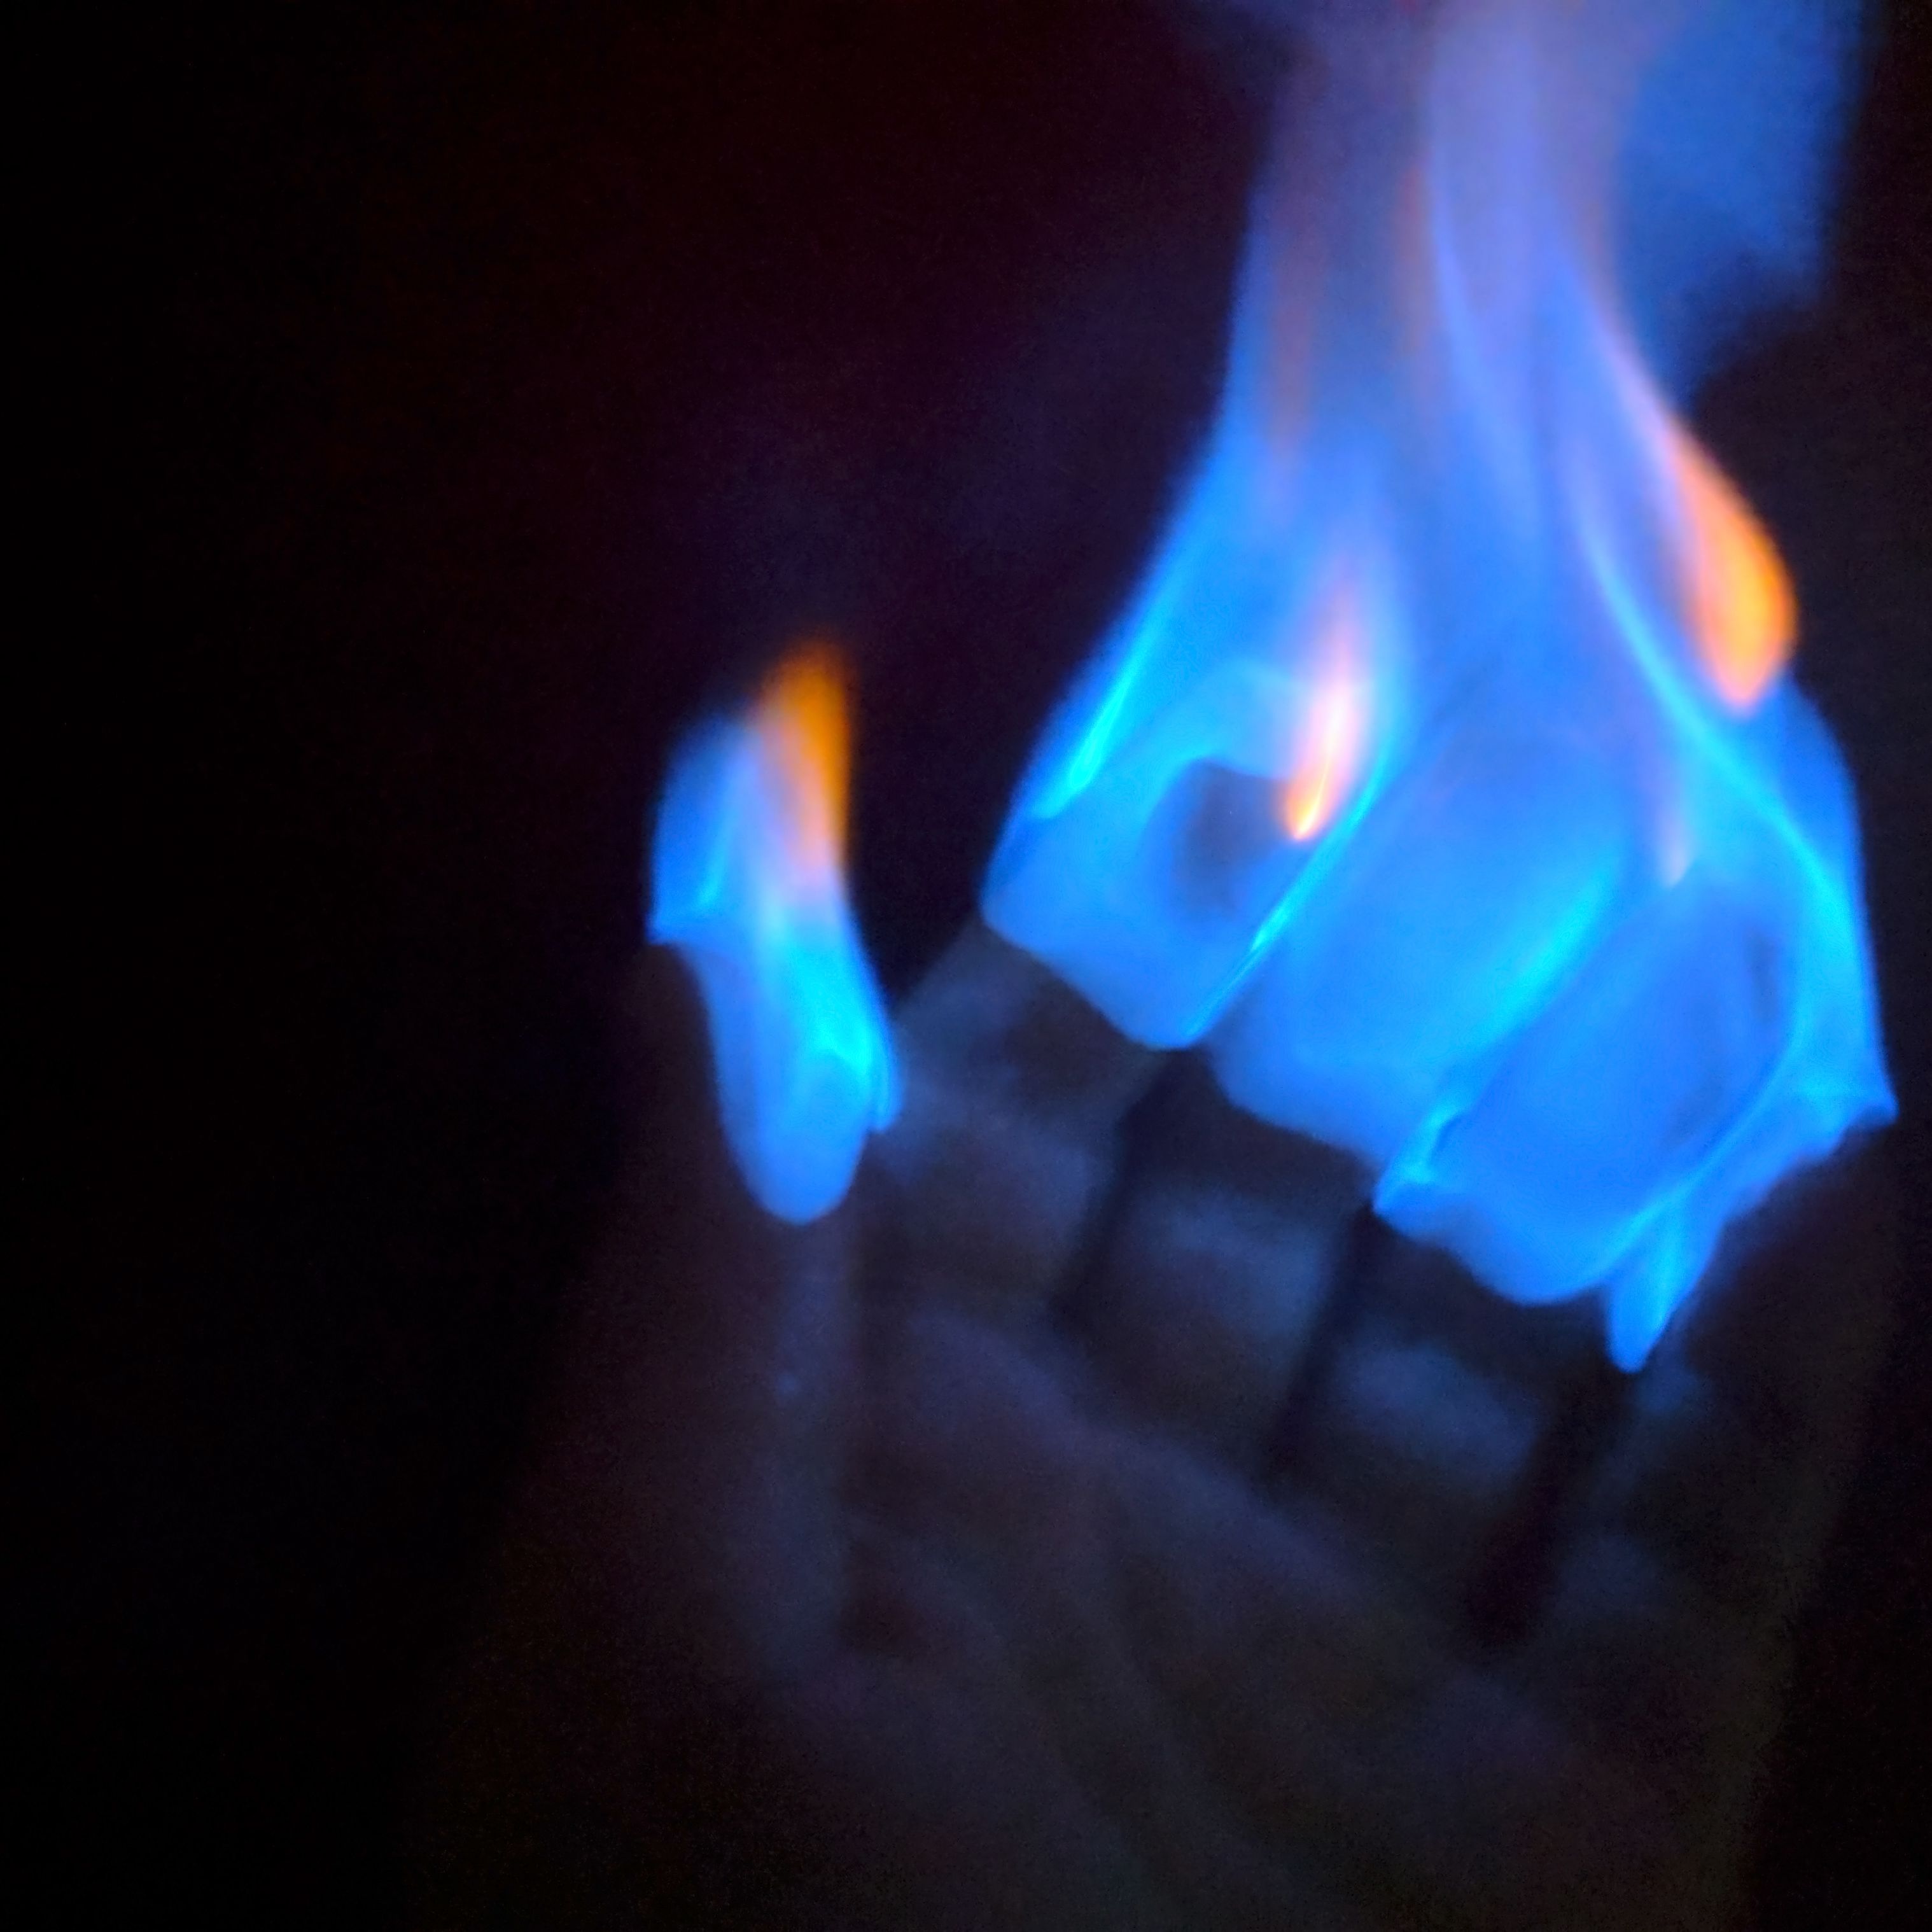 Diy Water Vapor Fireplace Inspirational Hand Sanitizer Fire Project Instructions